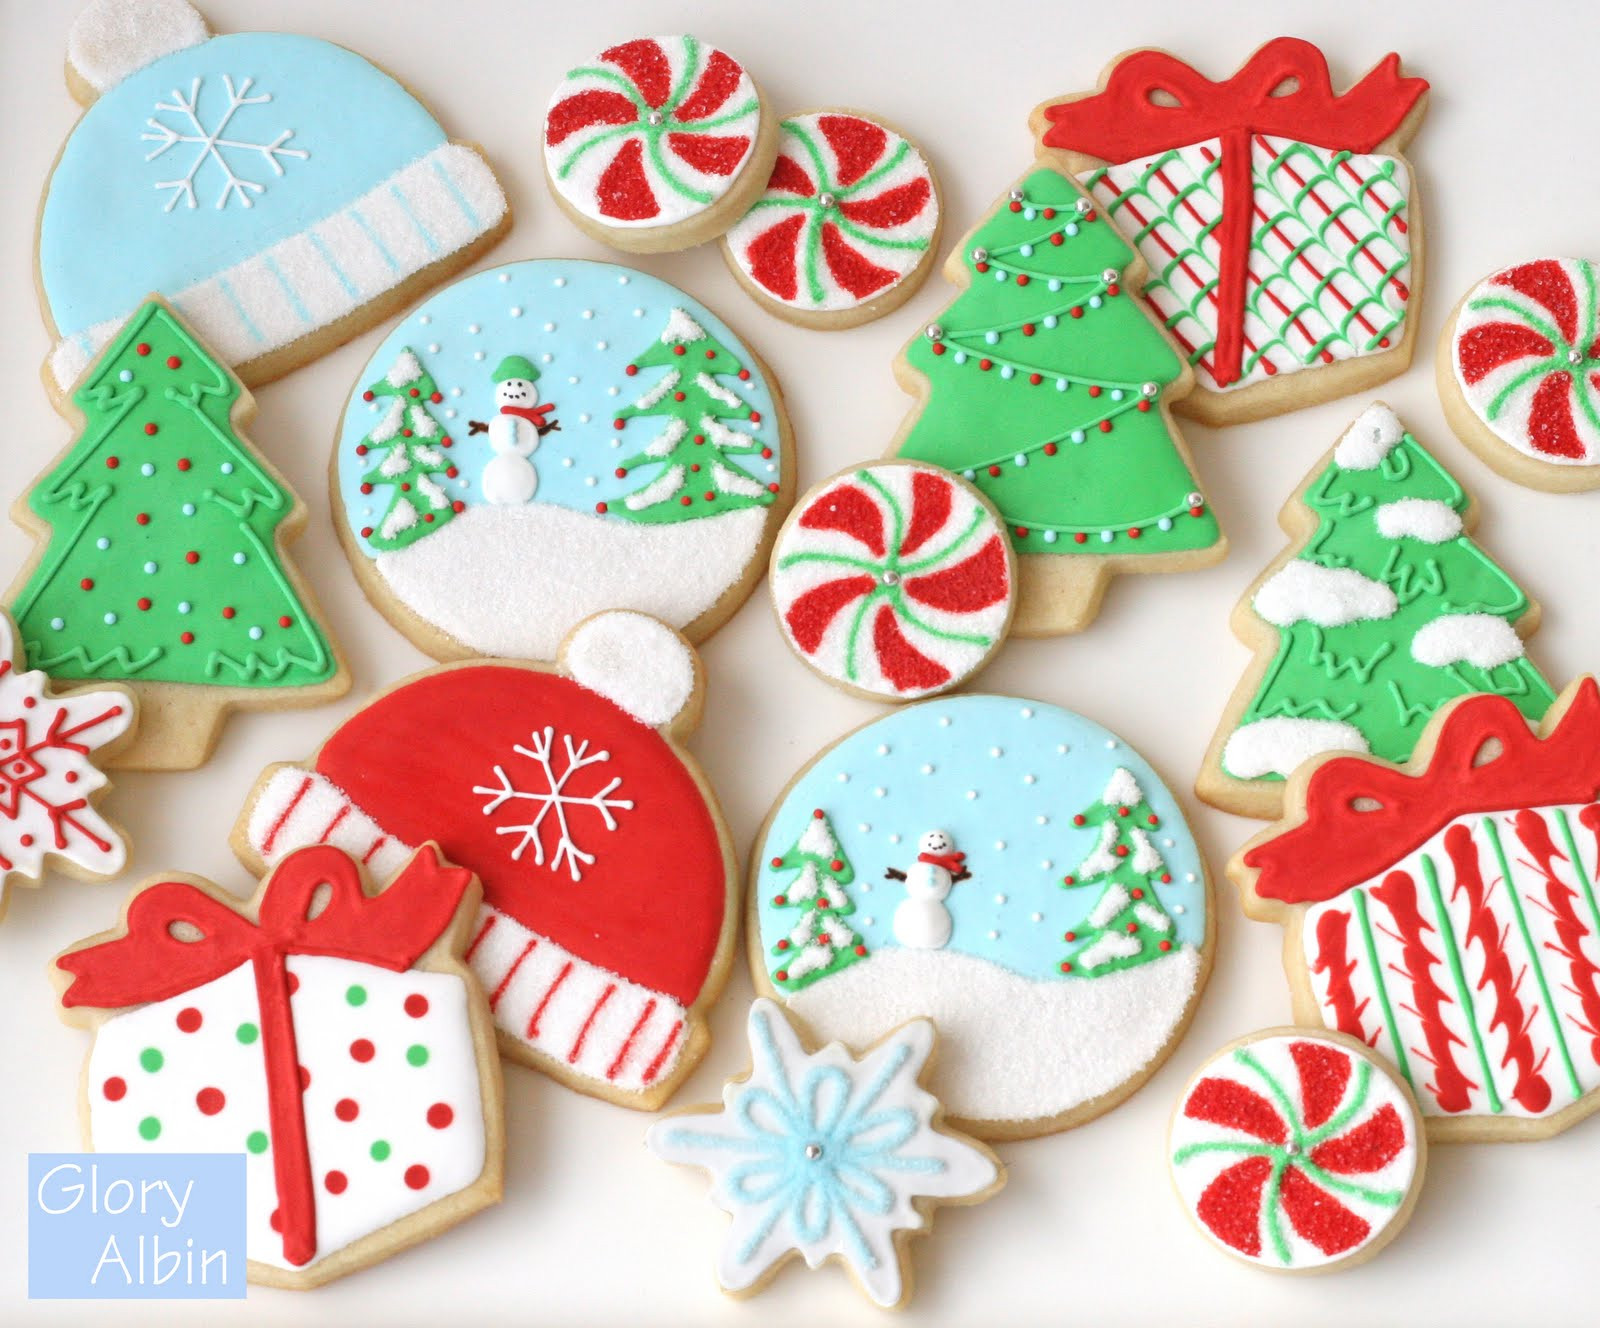 Christmas Sugar Cookies With Royal Icing
 Decorating Sugar Cookies with Royal Icing – Glorious Treats